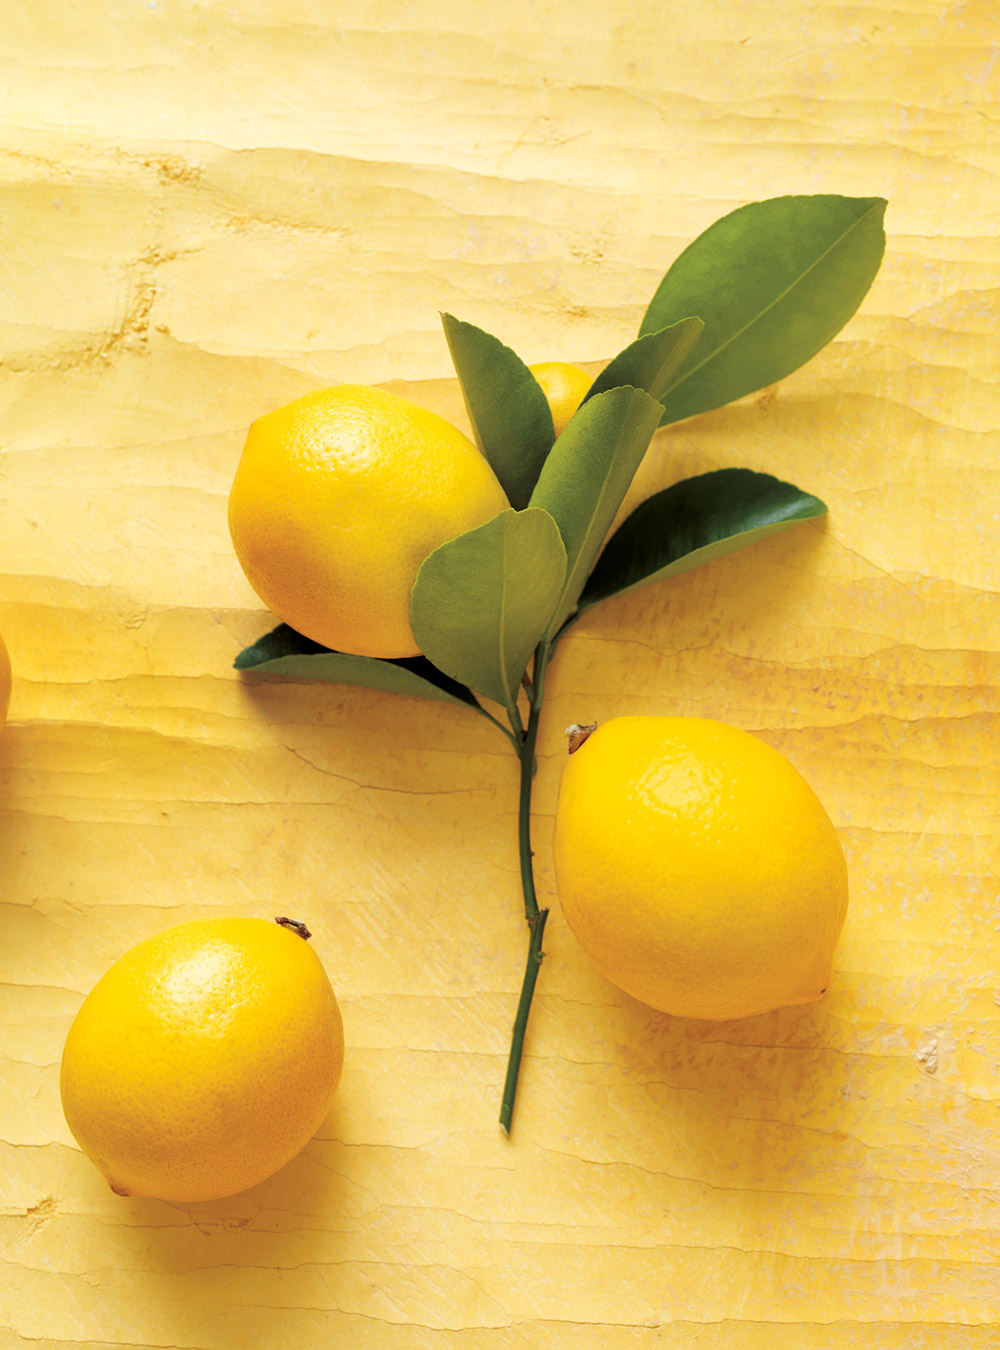 Tarte au citron meringuée classique | ricardo